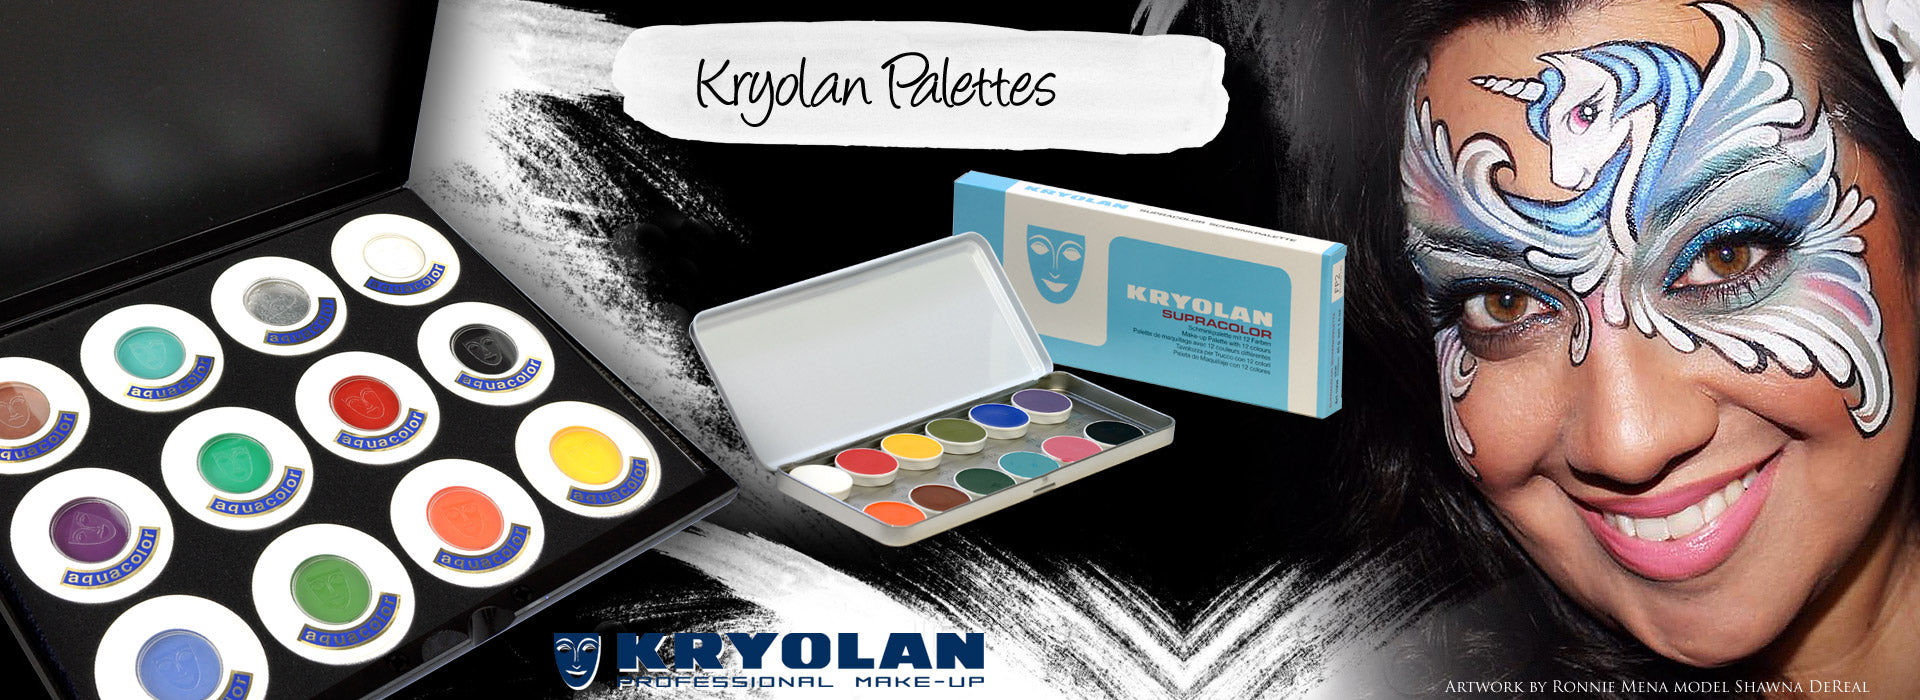 Build Your Own Kryolan Palette